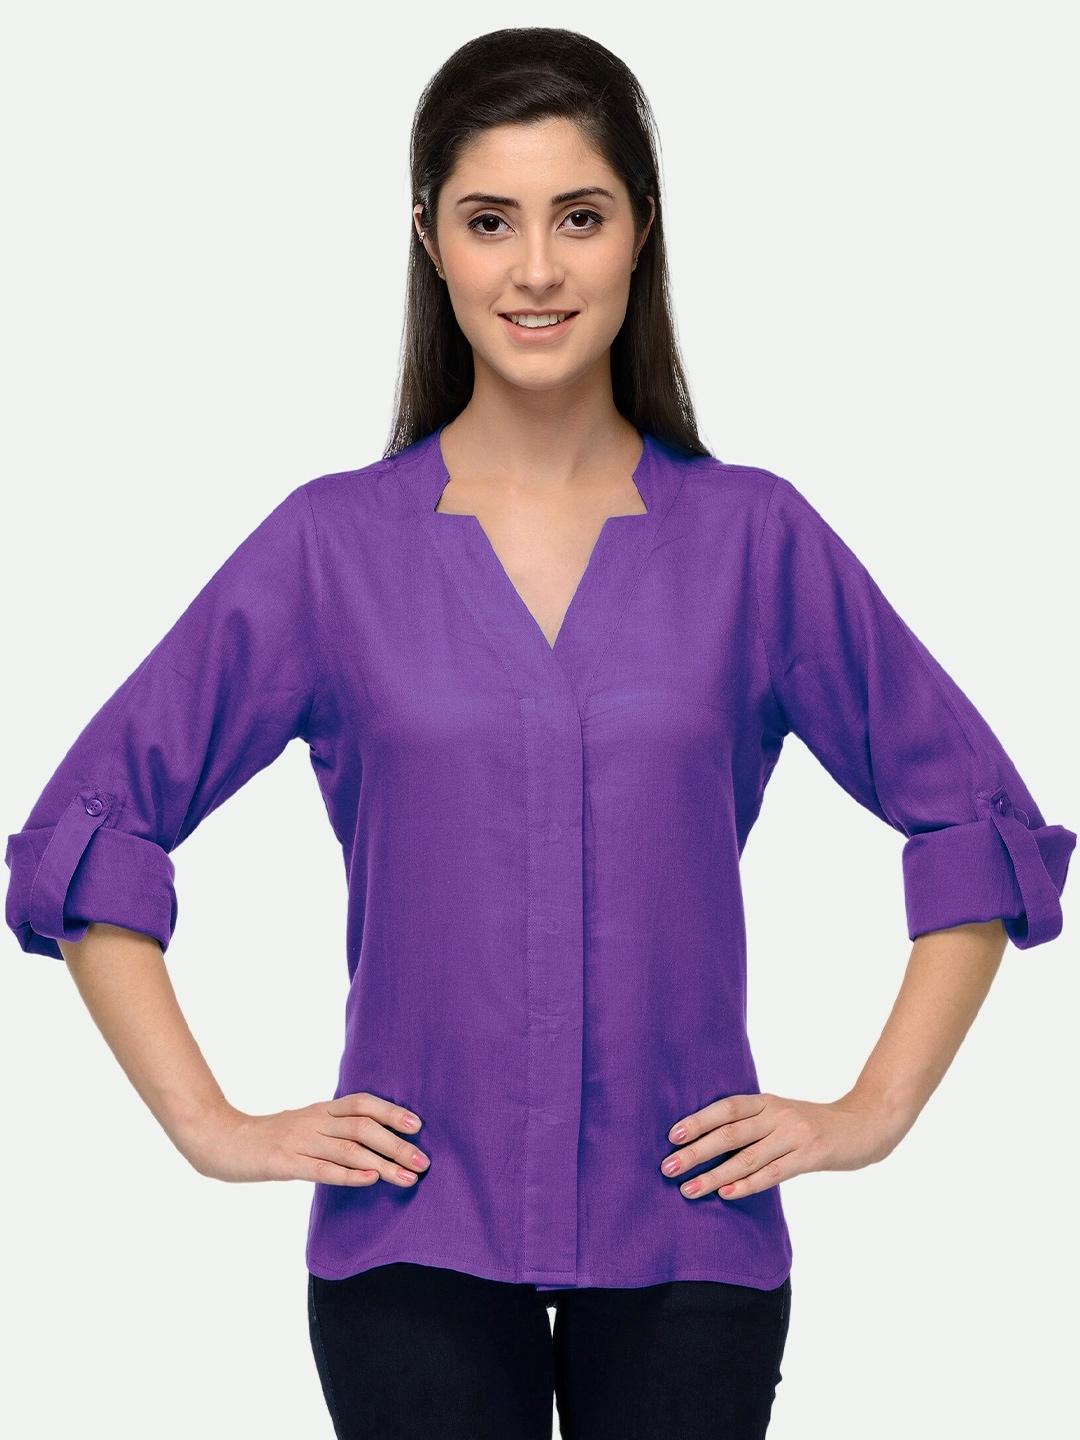 patrorna women purple comfort solid casual shirt